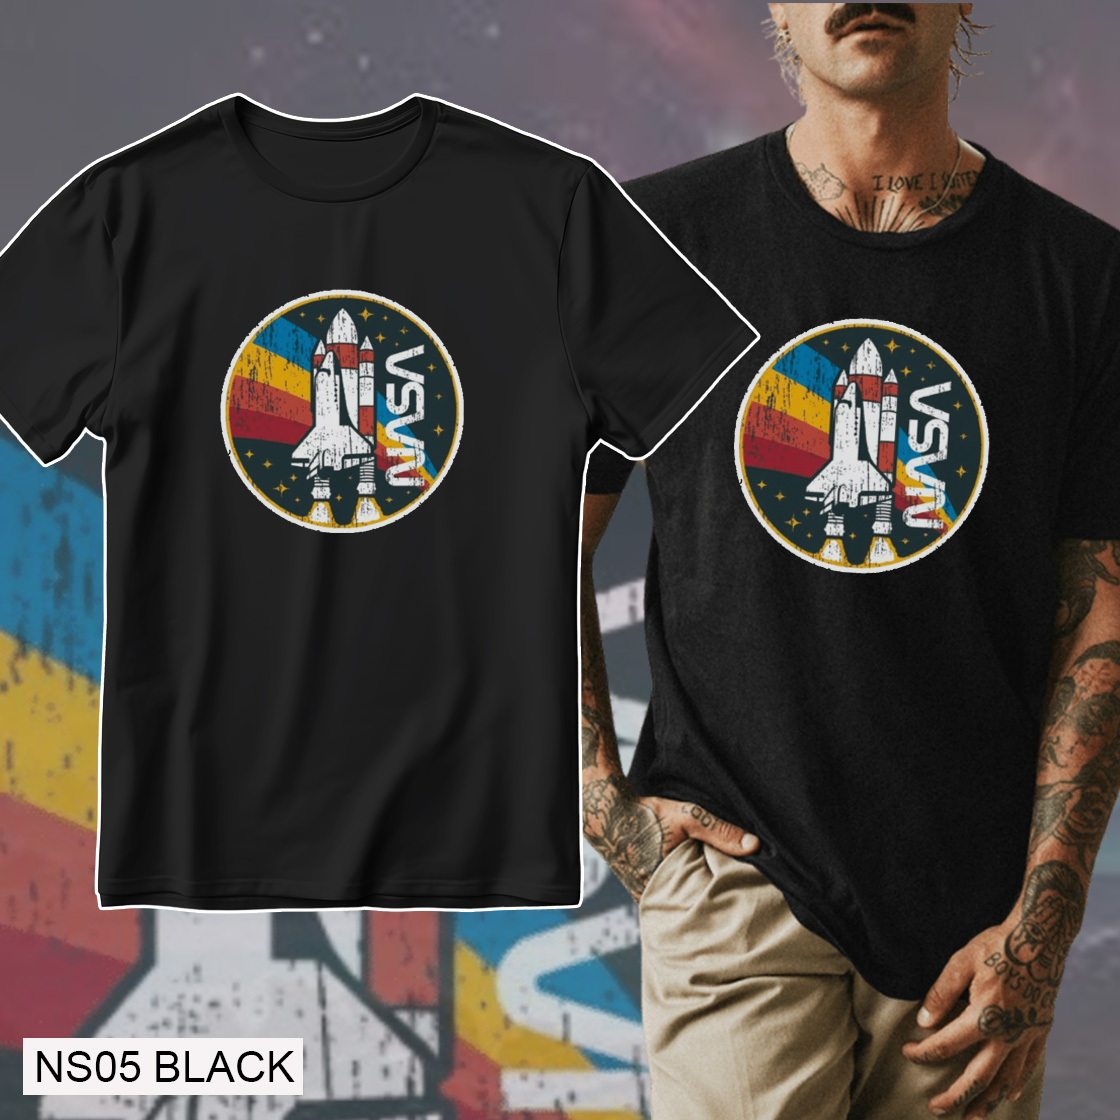 NS05 BLACK